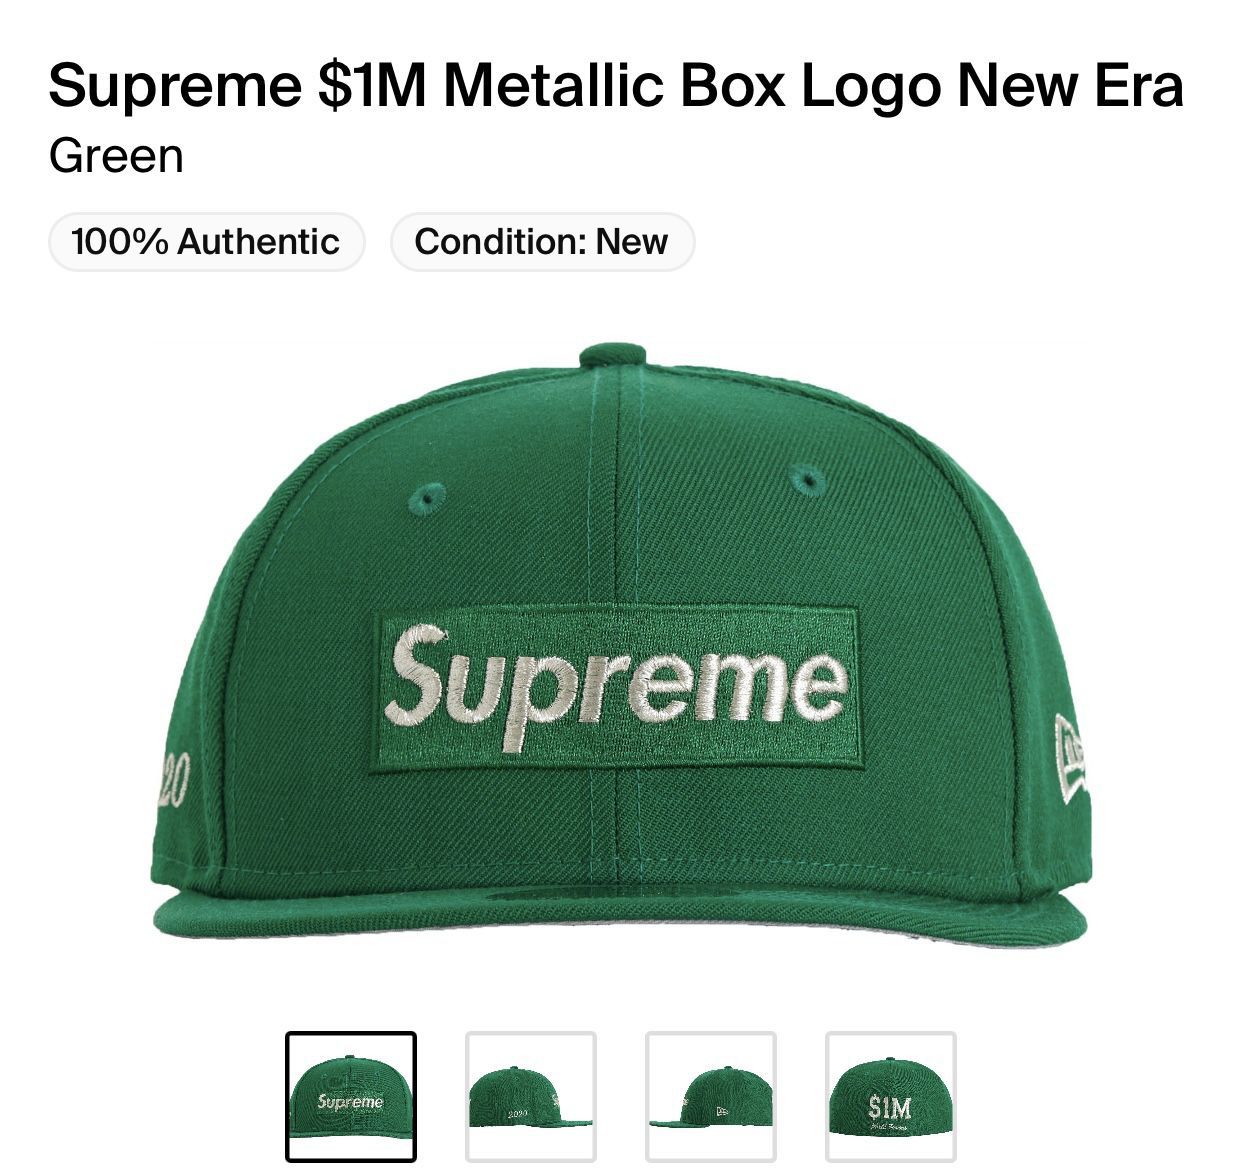  Supreme $1 Million Metallic New Era Fitted Hat